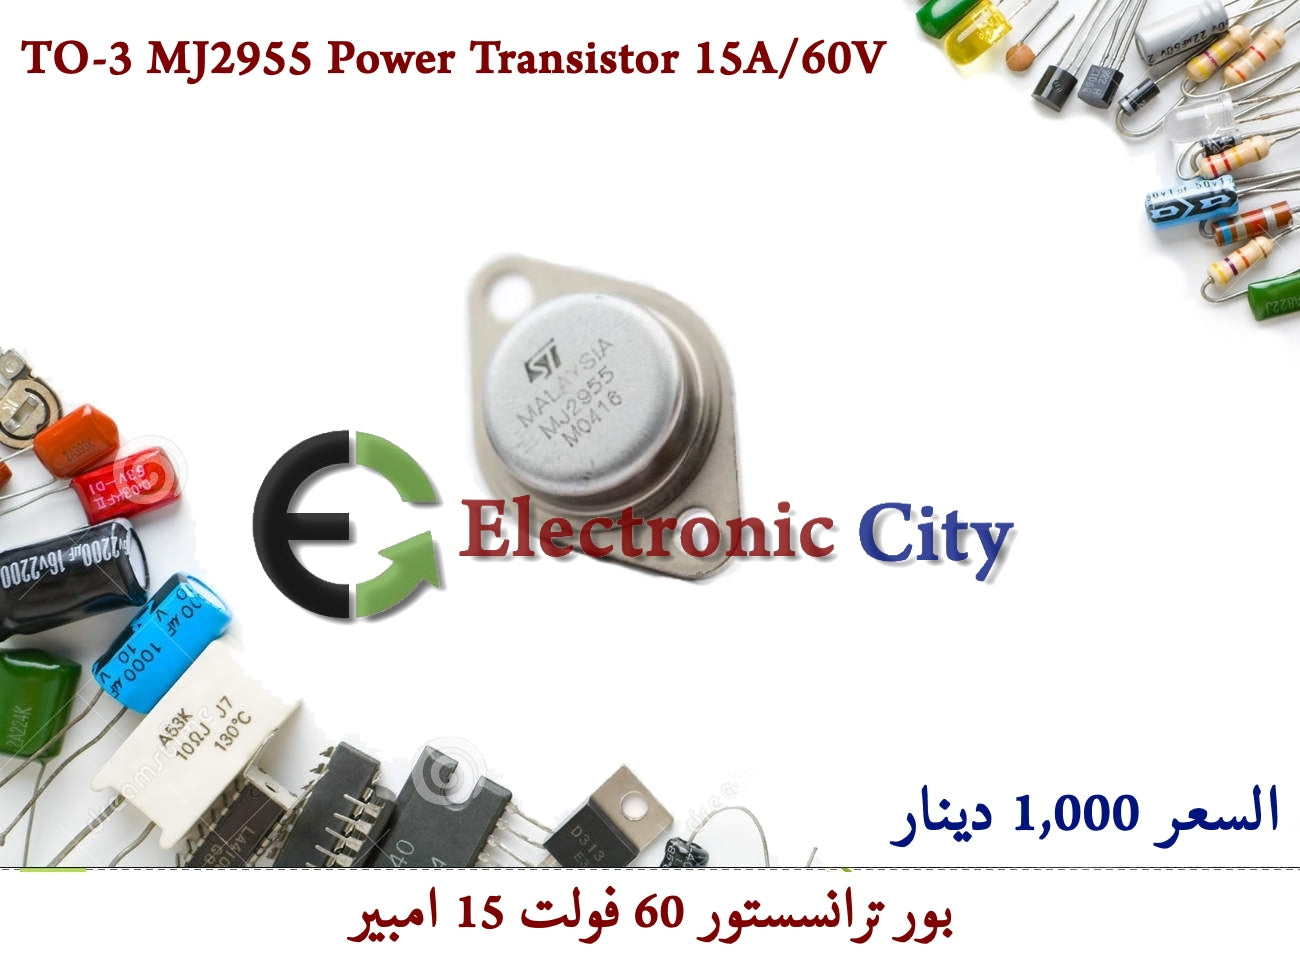 TO-3 MJ2955 Power Transistor 15A 60V